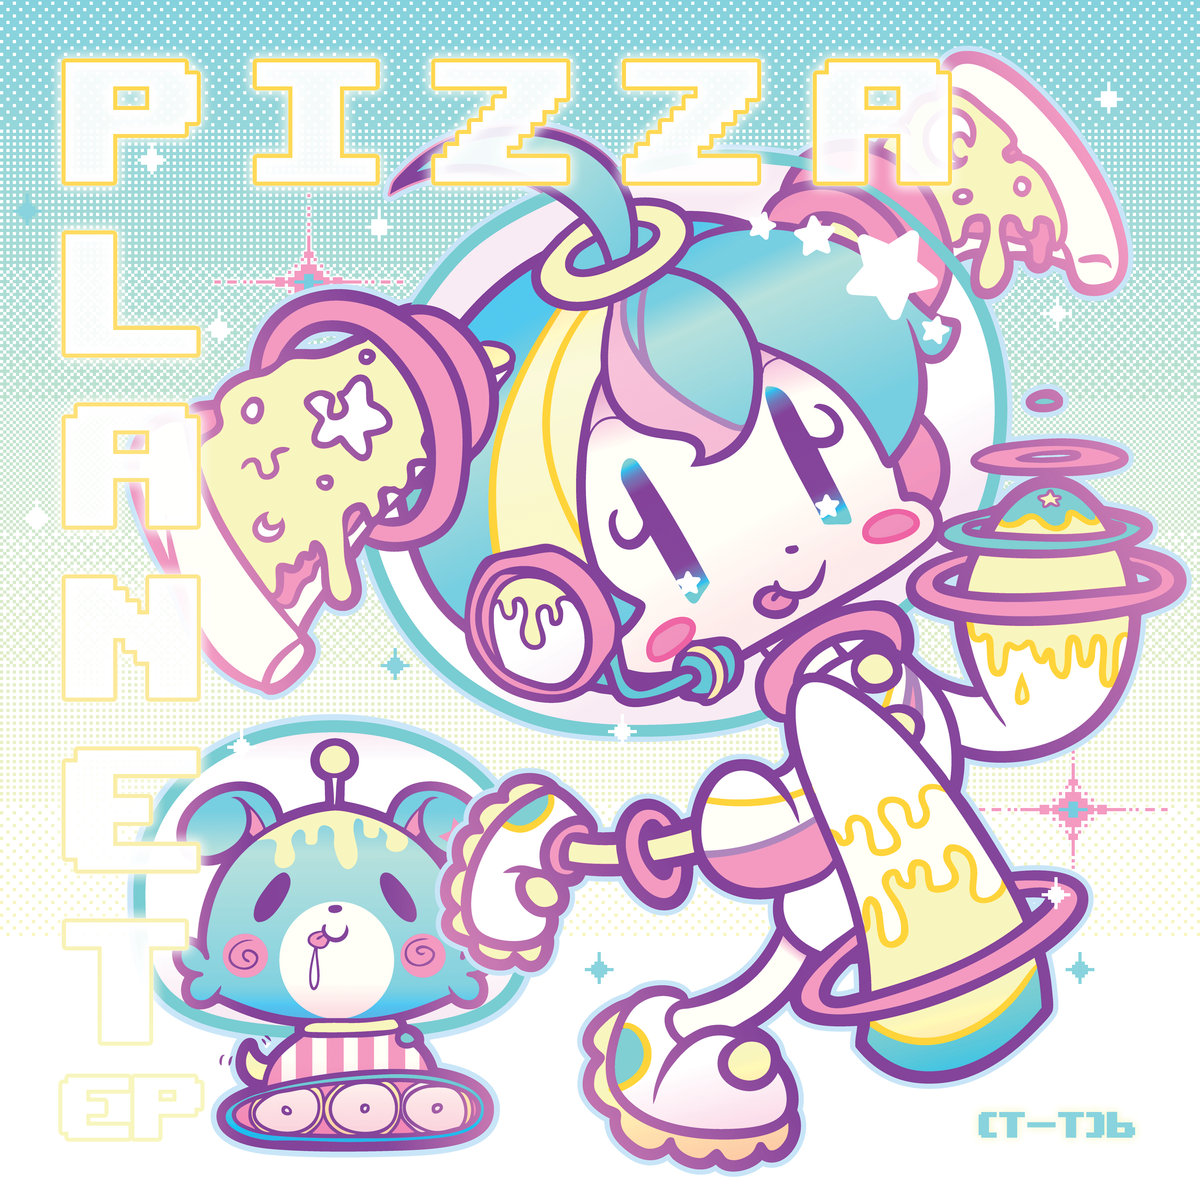 (T-T)b - Pizza Planet